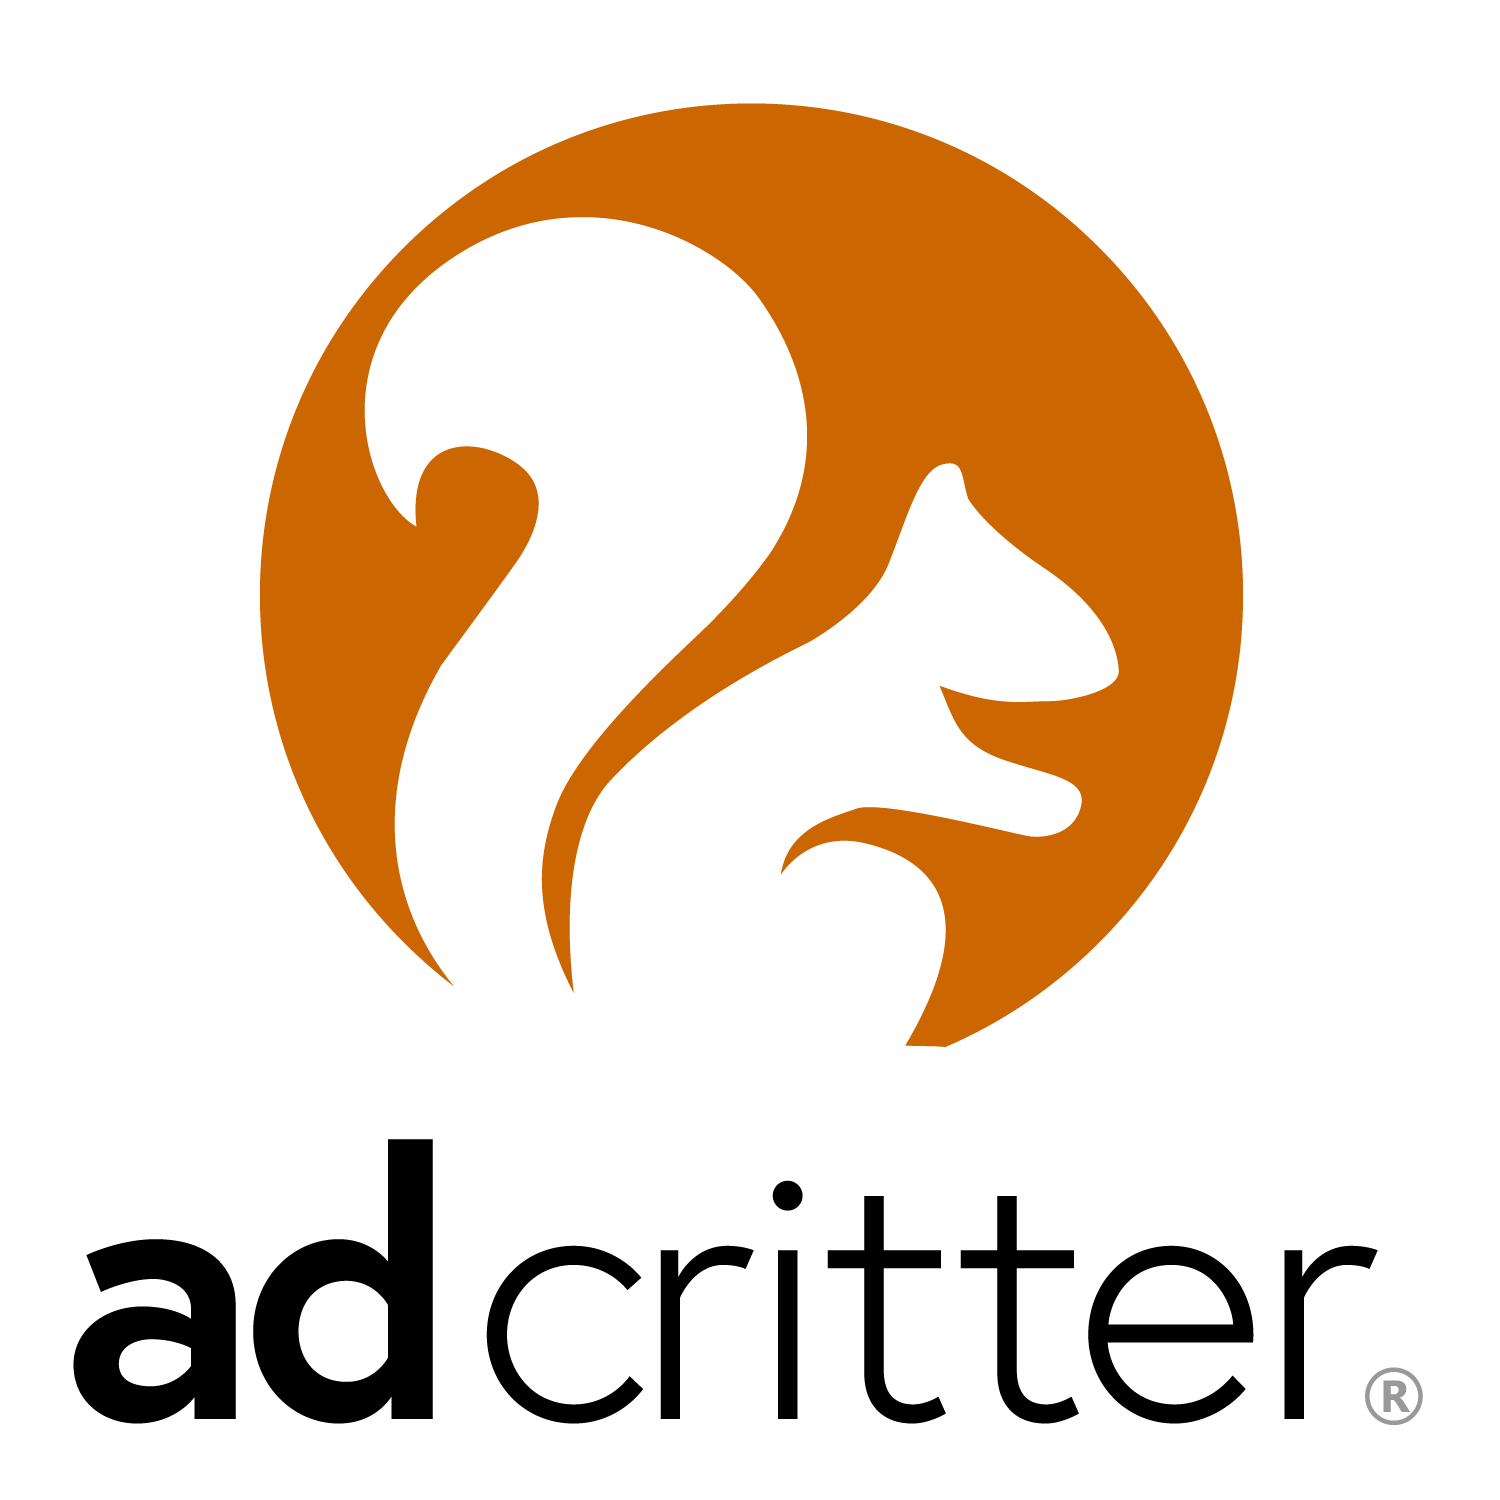 AdCritter Logo